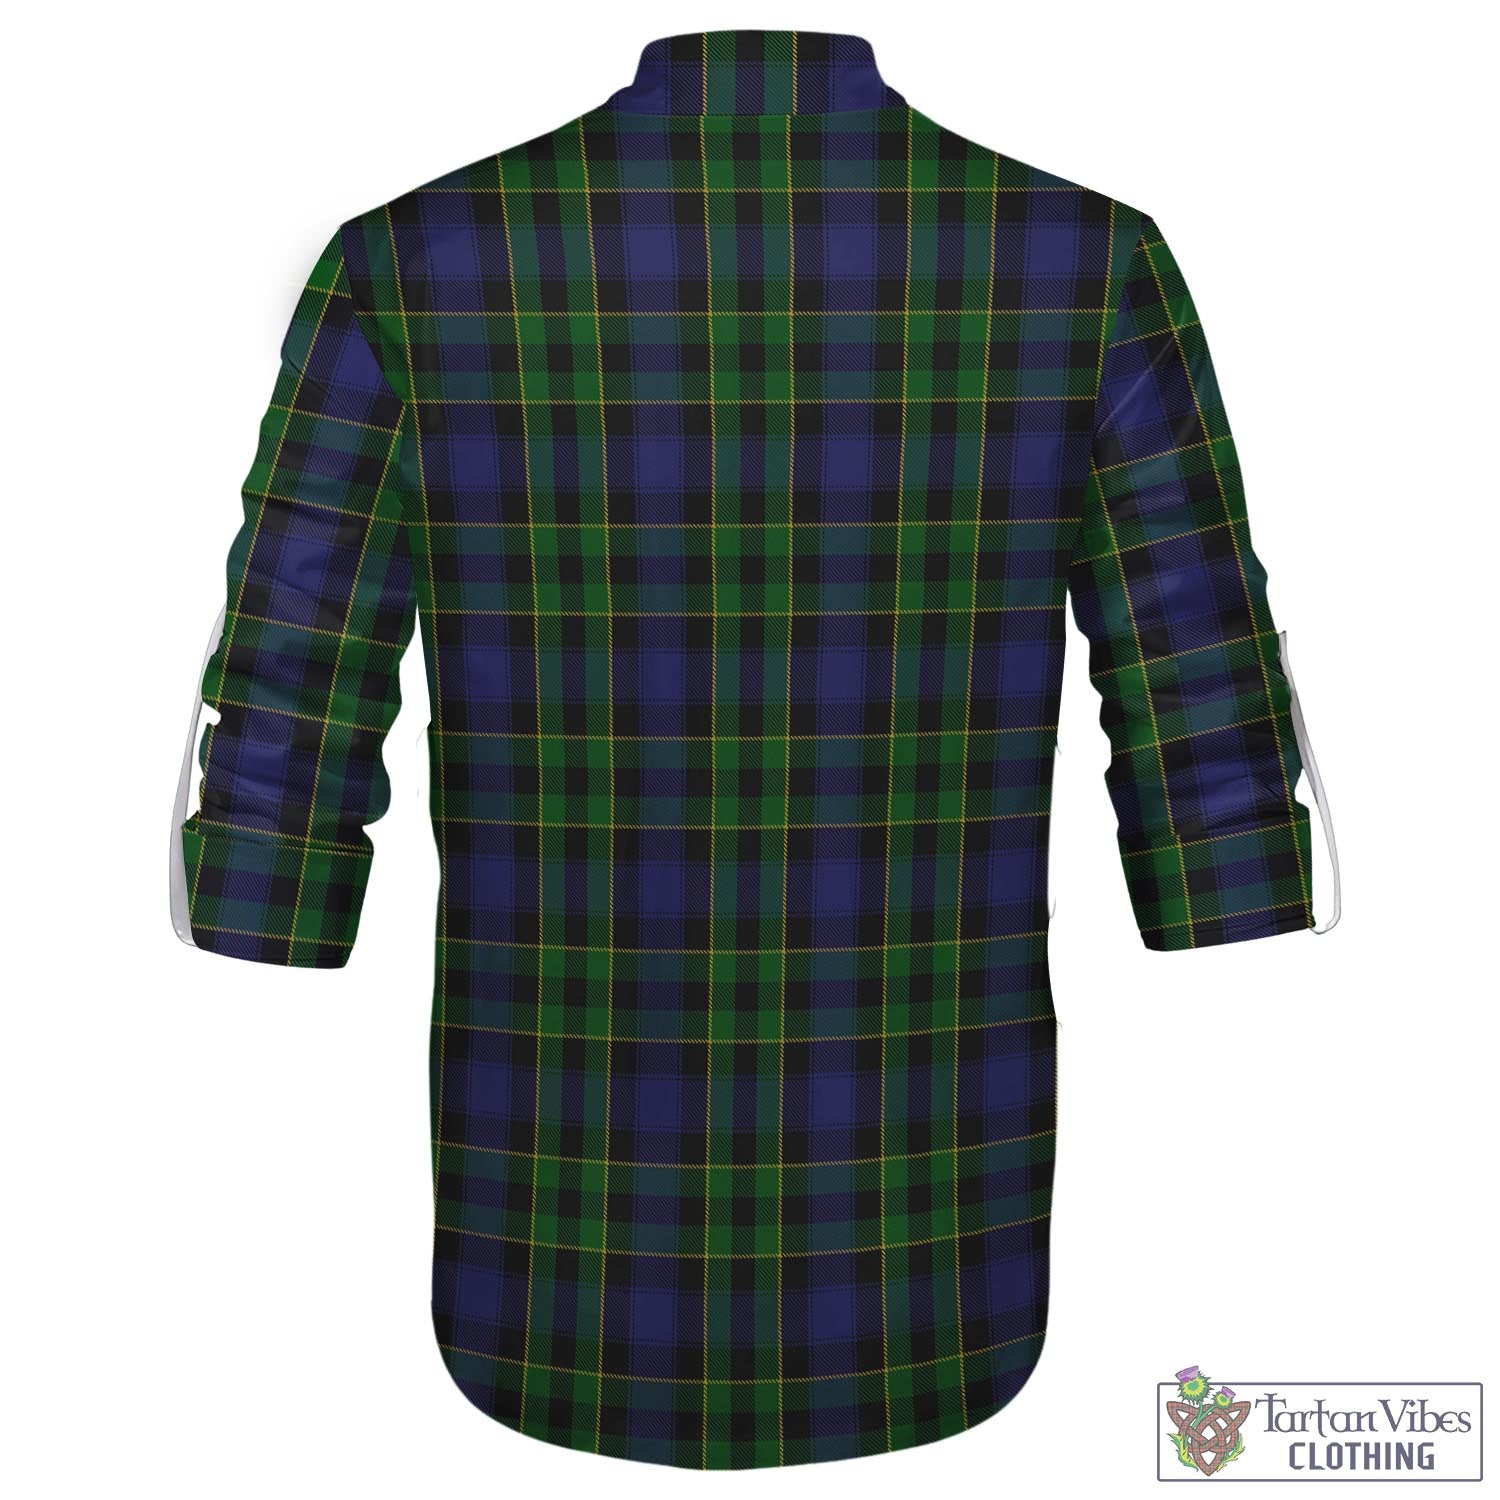 Tartan Vibes Clothing Mowat Tartan Men's Scottish Traditional Jacobite Ghillie Kilt Shirt